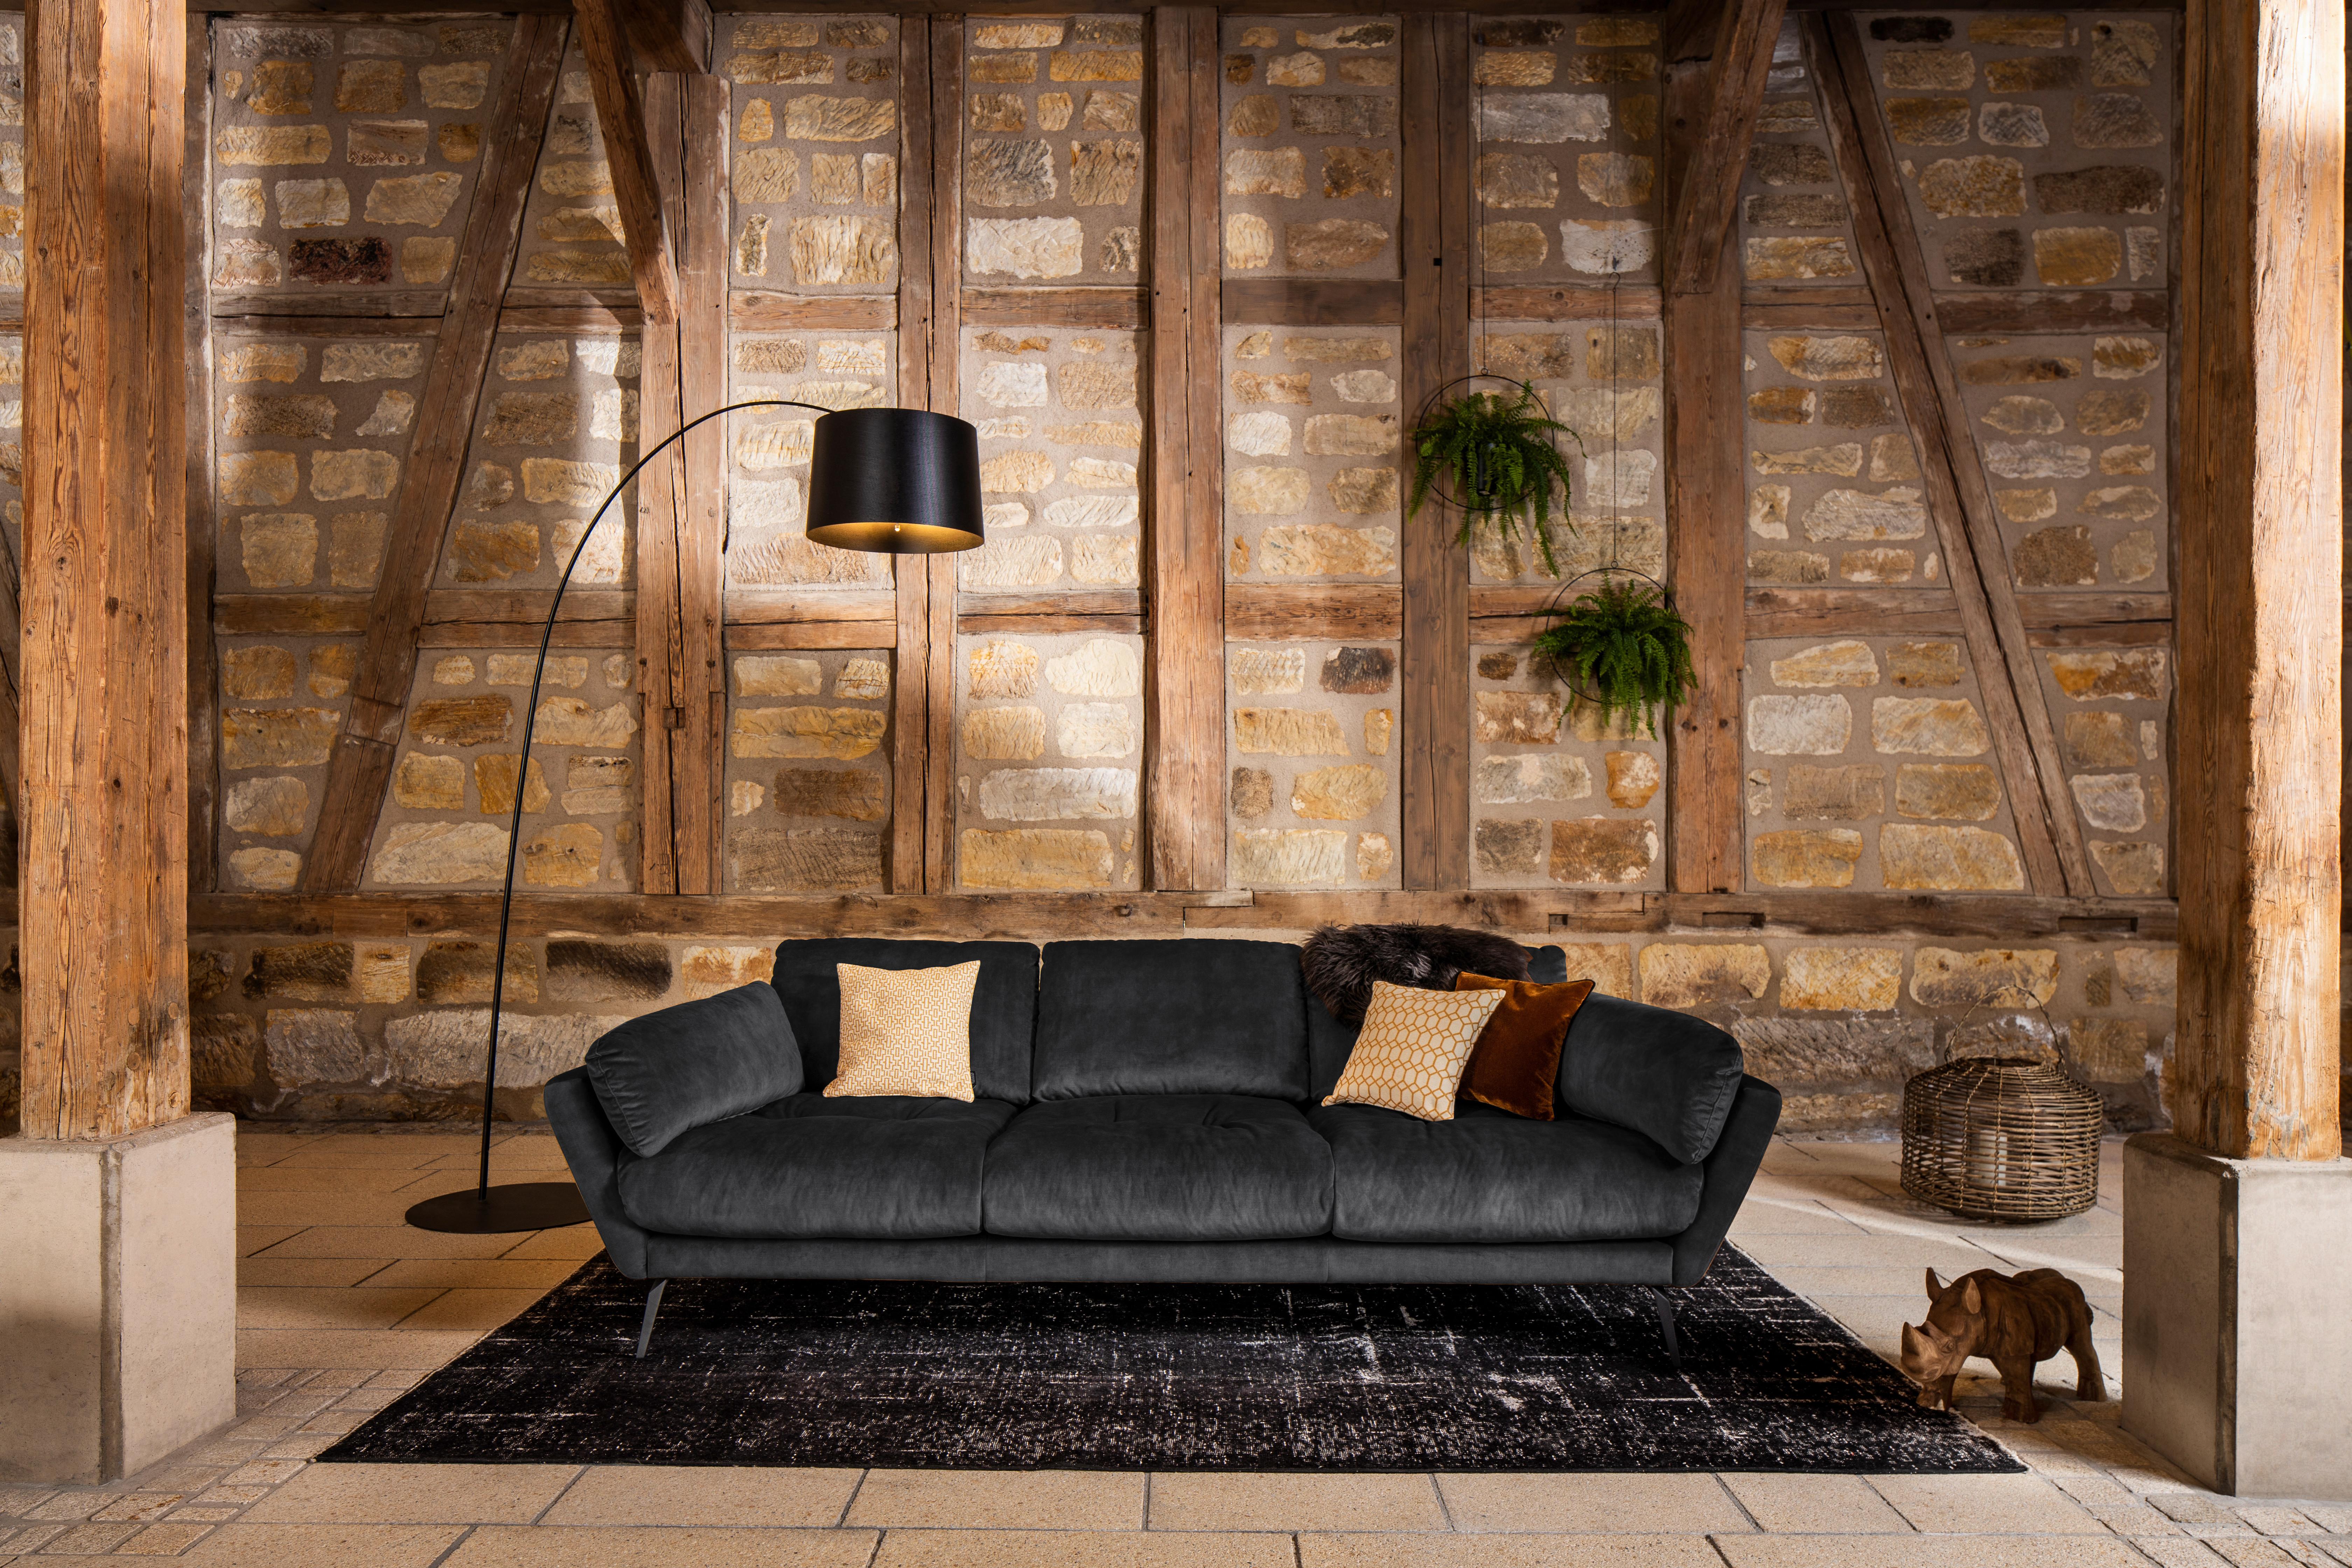 Big Sofa Softy mit Kissen B: 254 cm Dunkelgrau Velours - Dunkelgrau/Schwarz, MODERN, Textil (254/79/113cm) - W.Schillig